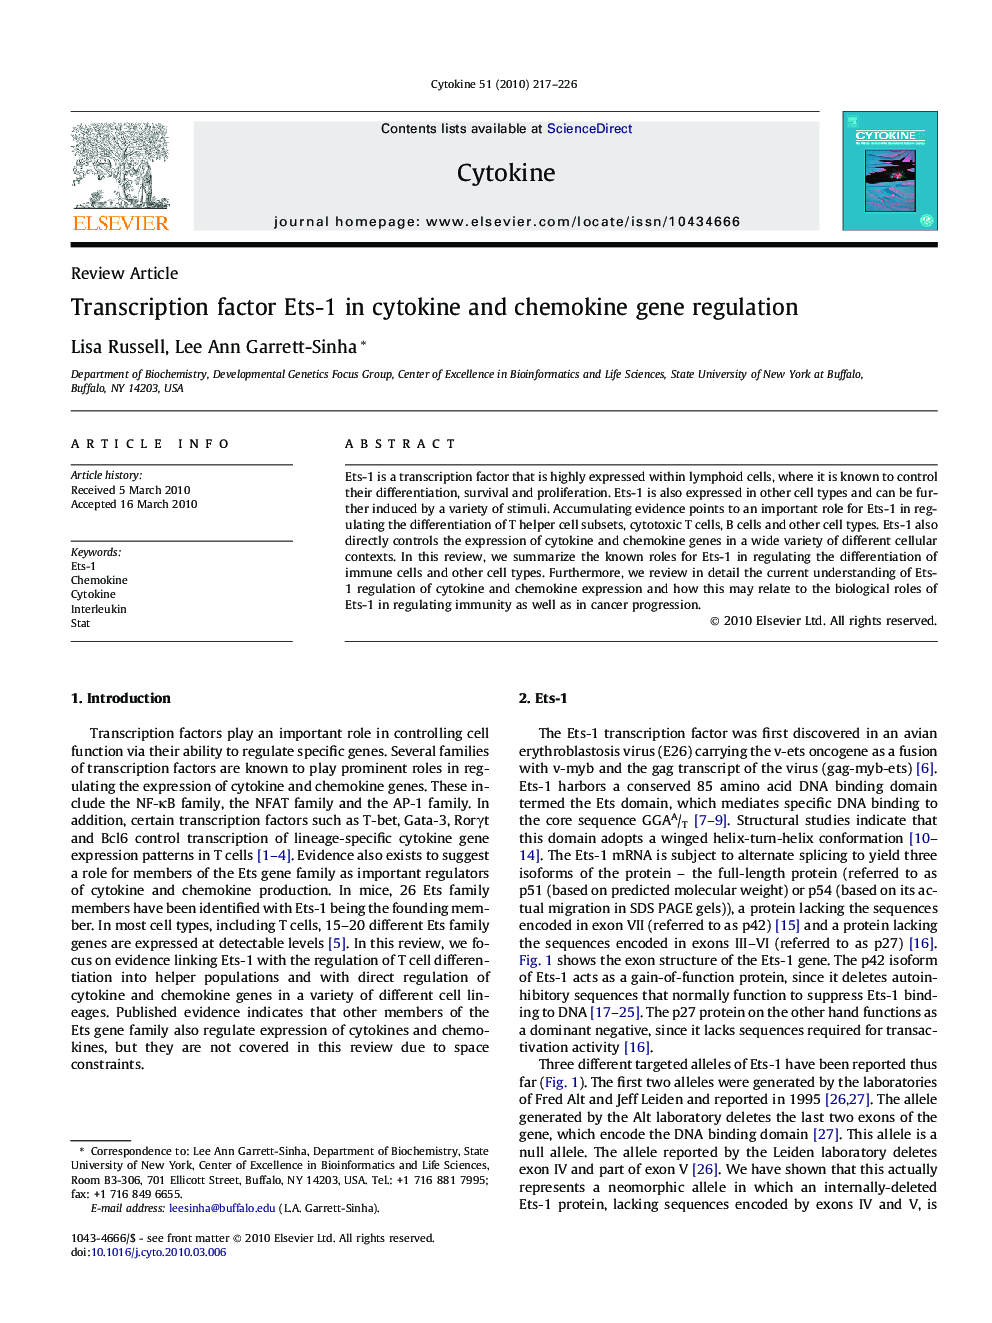 Transcription factor Ets-1 in cytokine and chemokine gene regulation